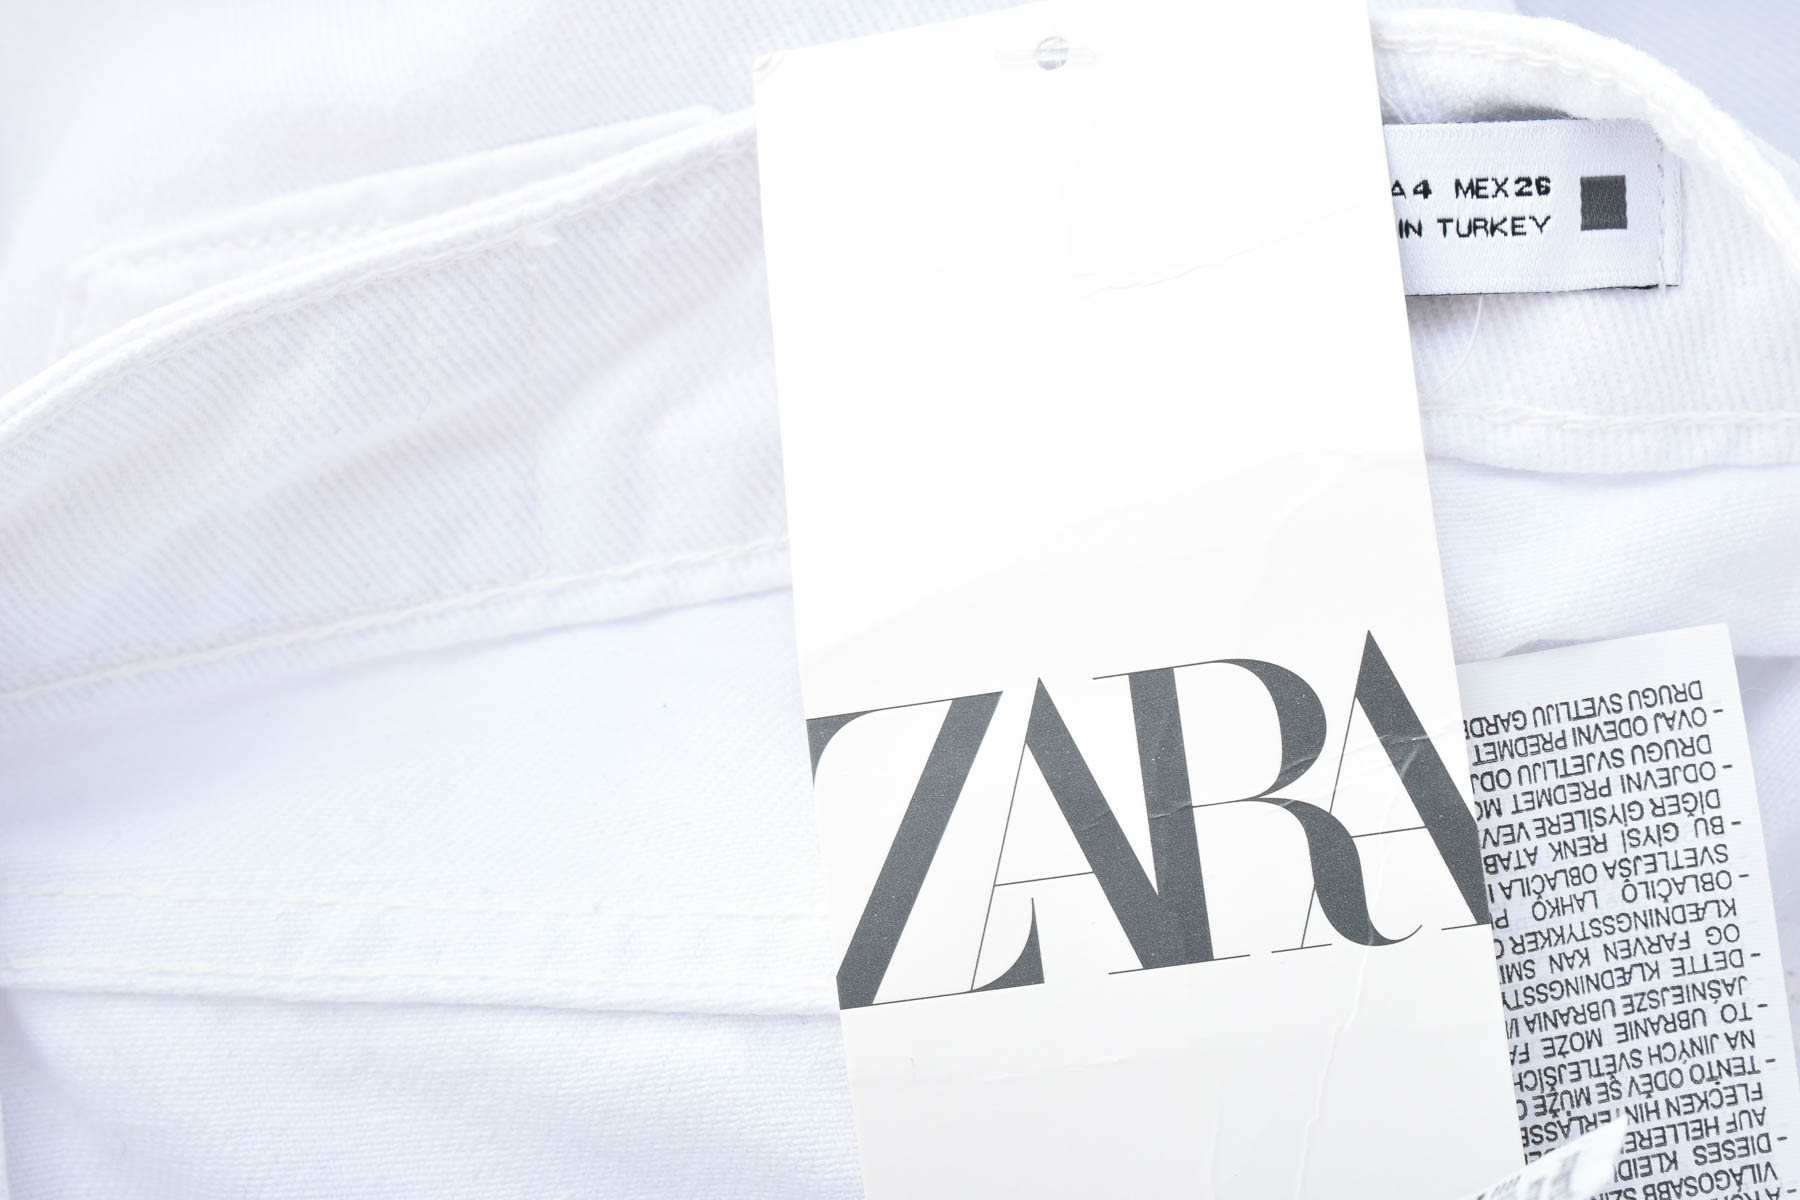 Jeans de damă - ZARA - 2